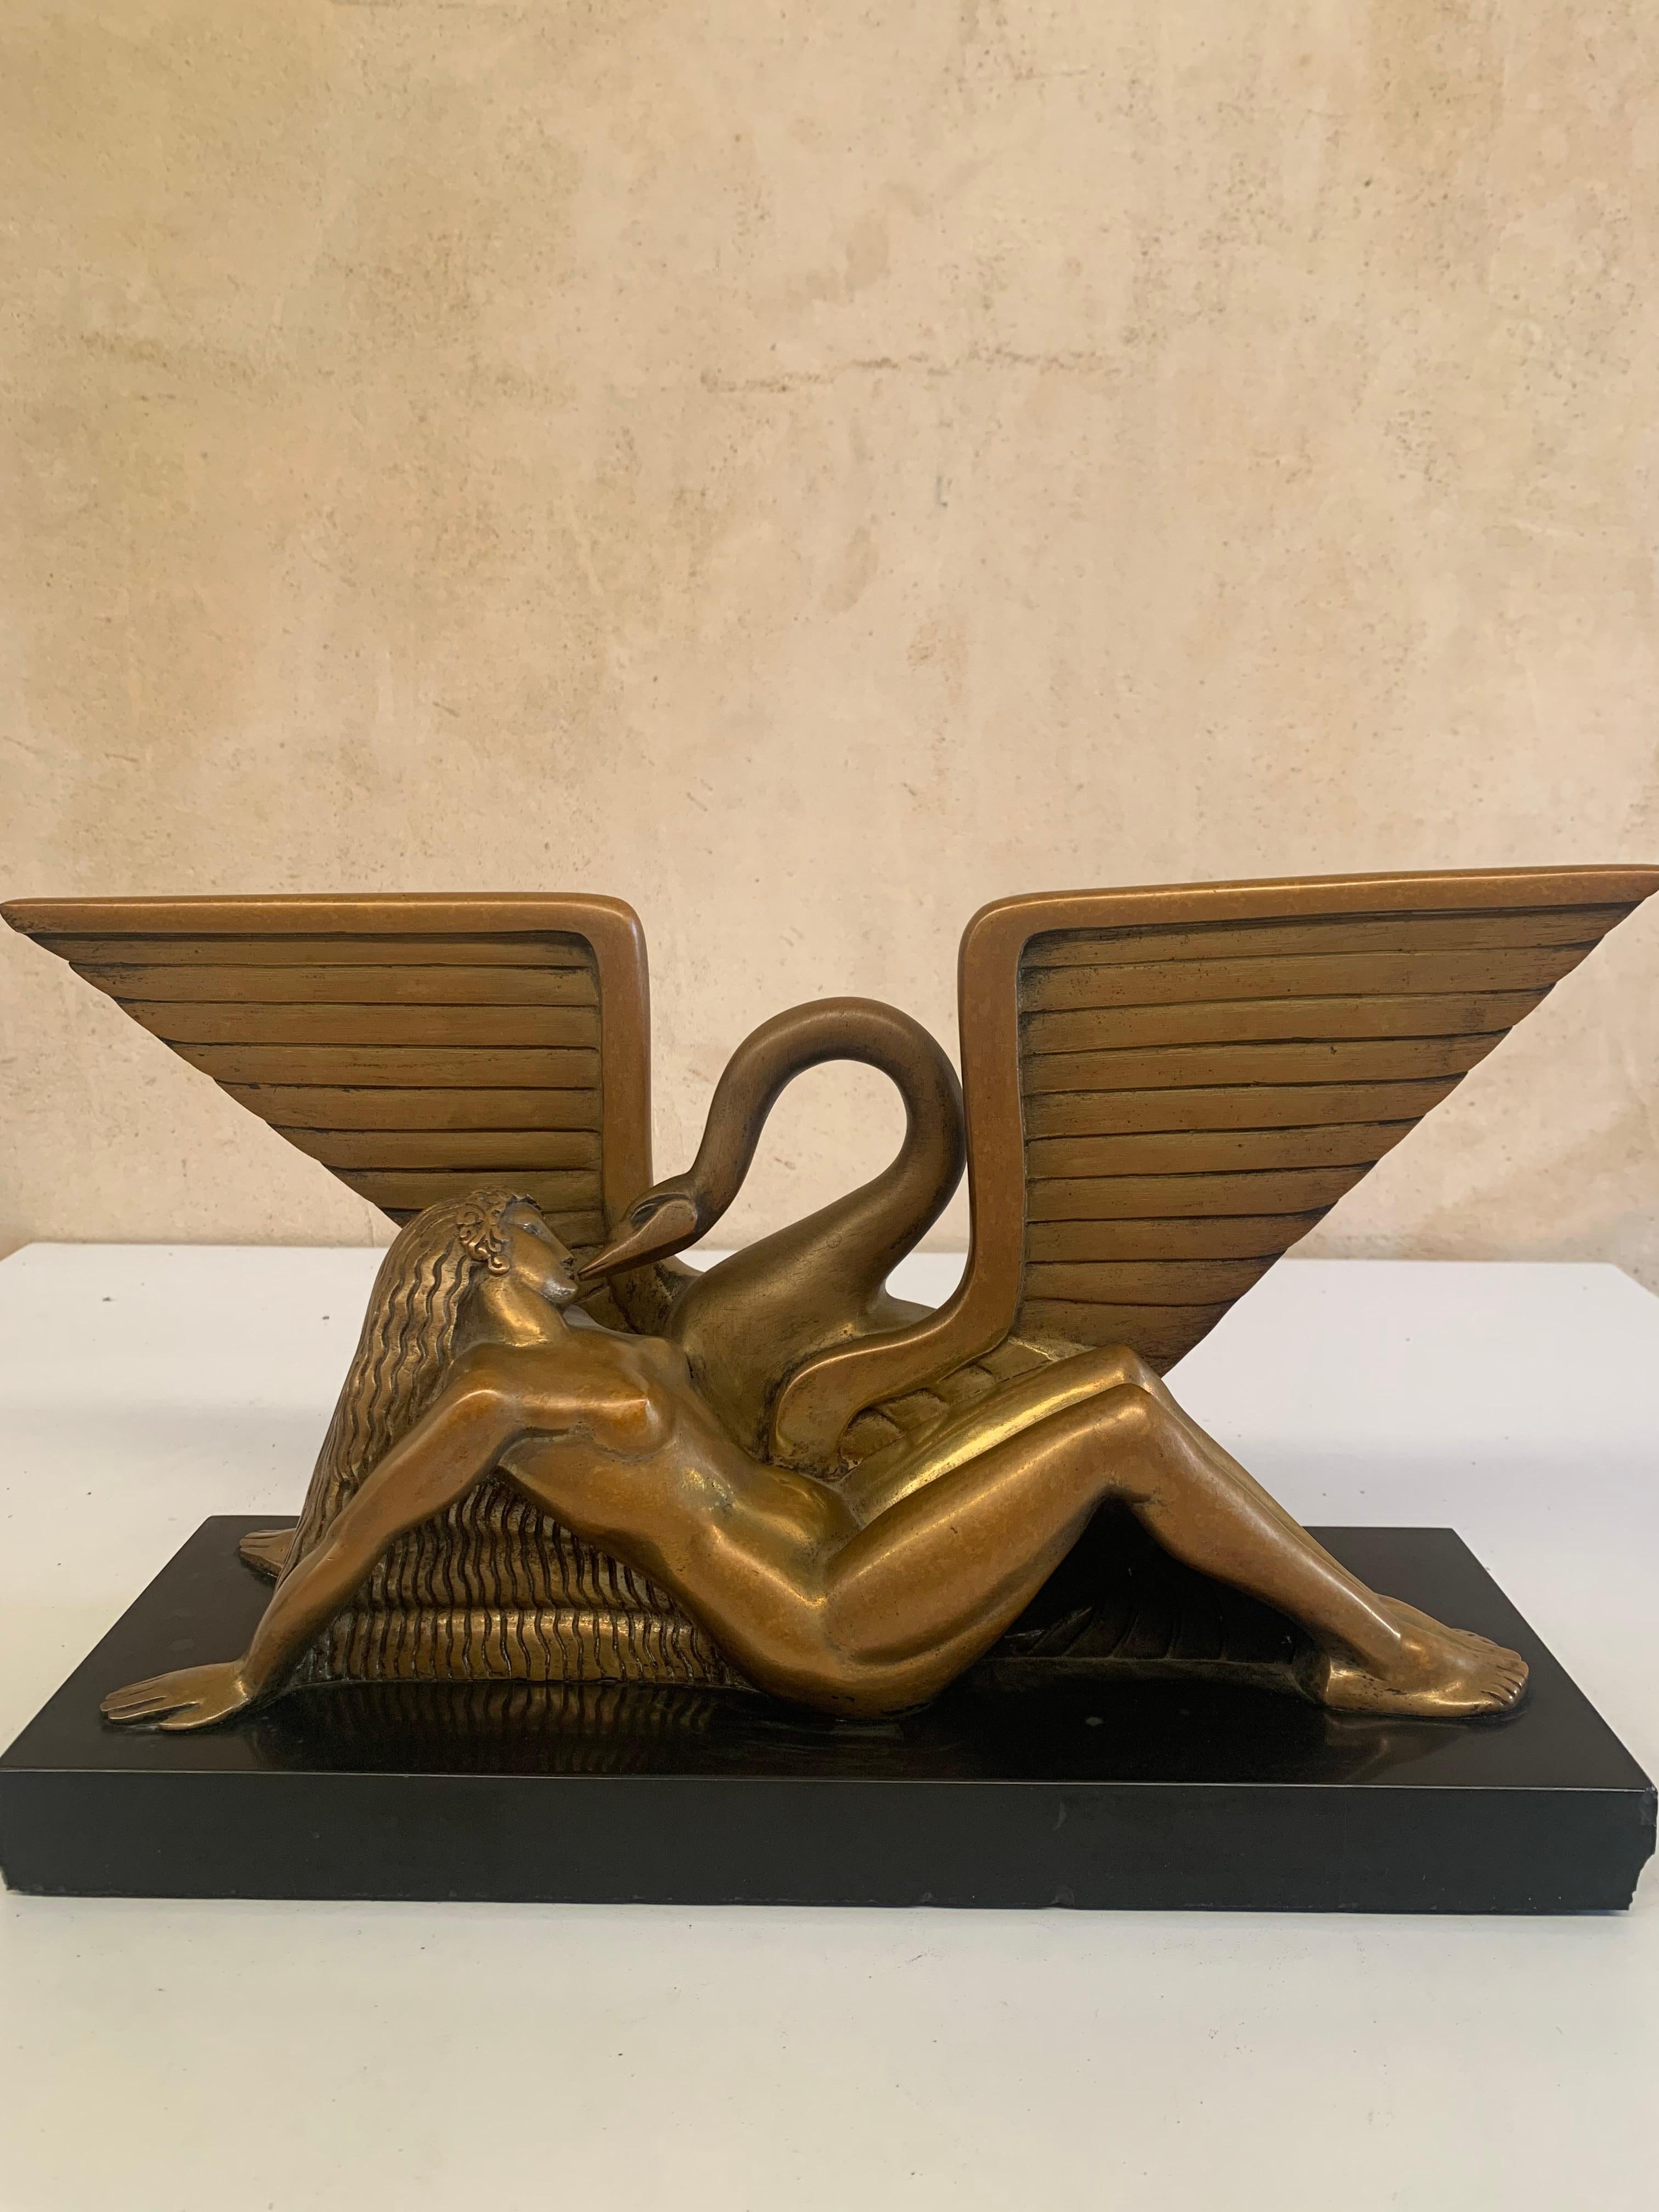 Exquisite Bronzeskulptur von Marcel-Andre Bouraine, 